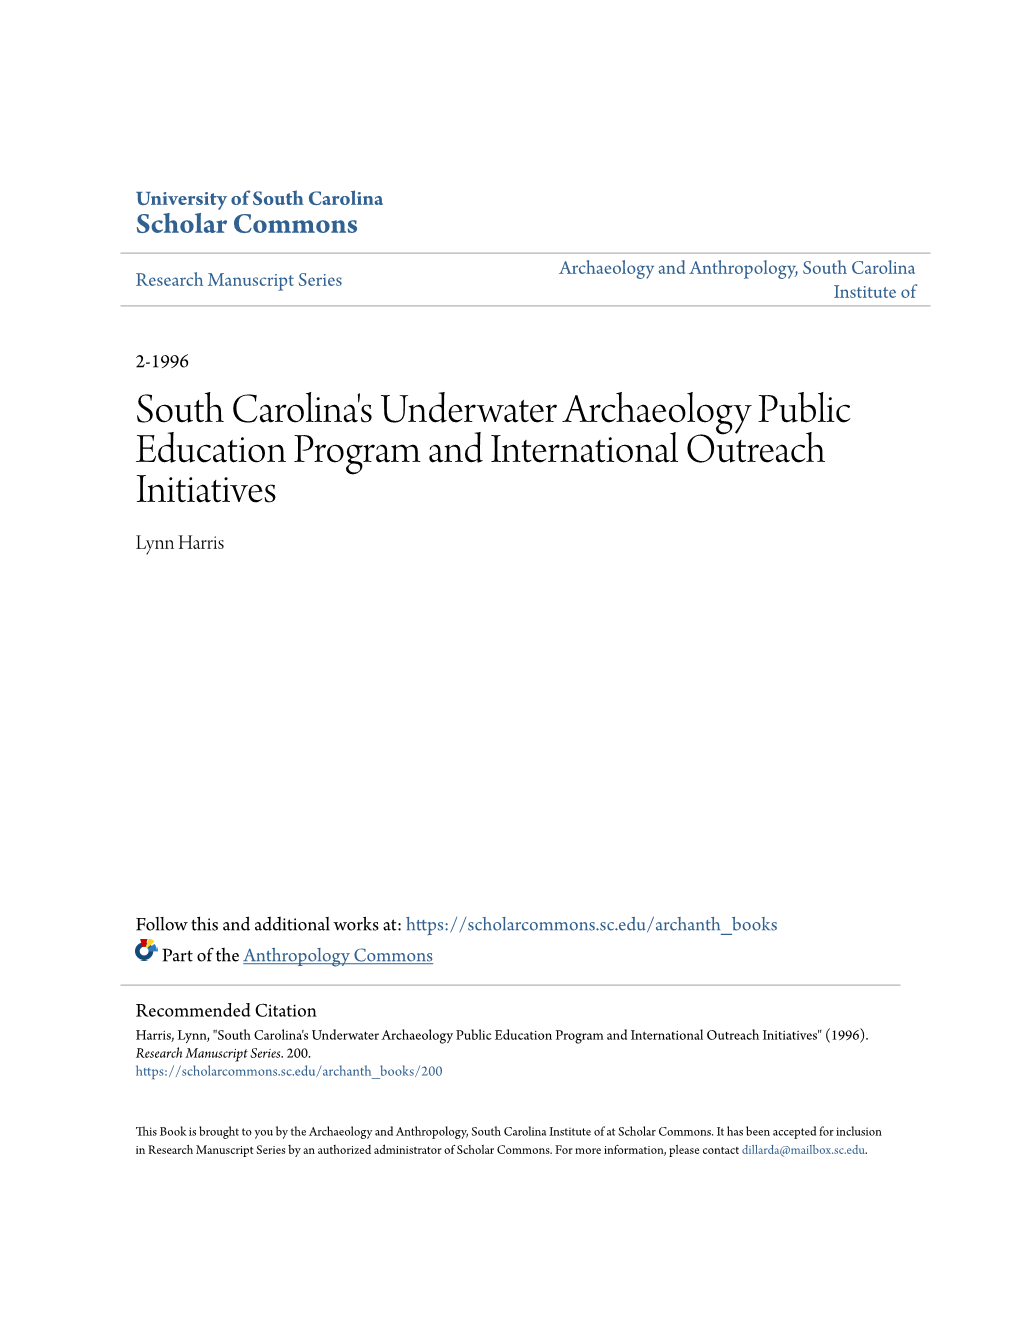 South Carolina's Underwater Archaeology Public Education Program and International Outreach Initiatives Lynn Harris